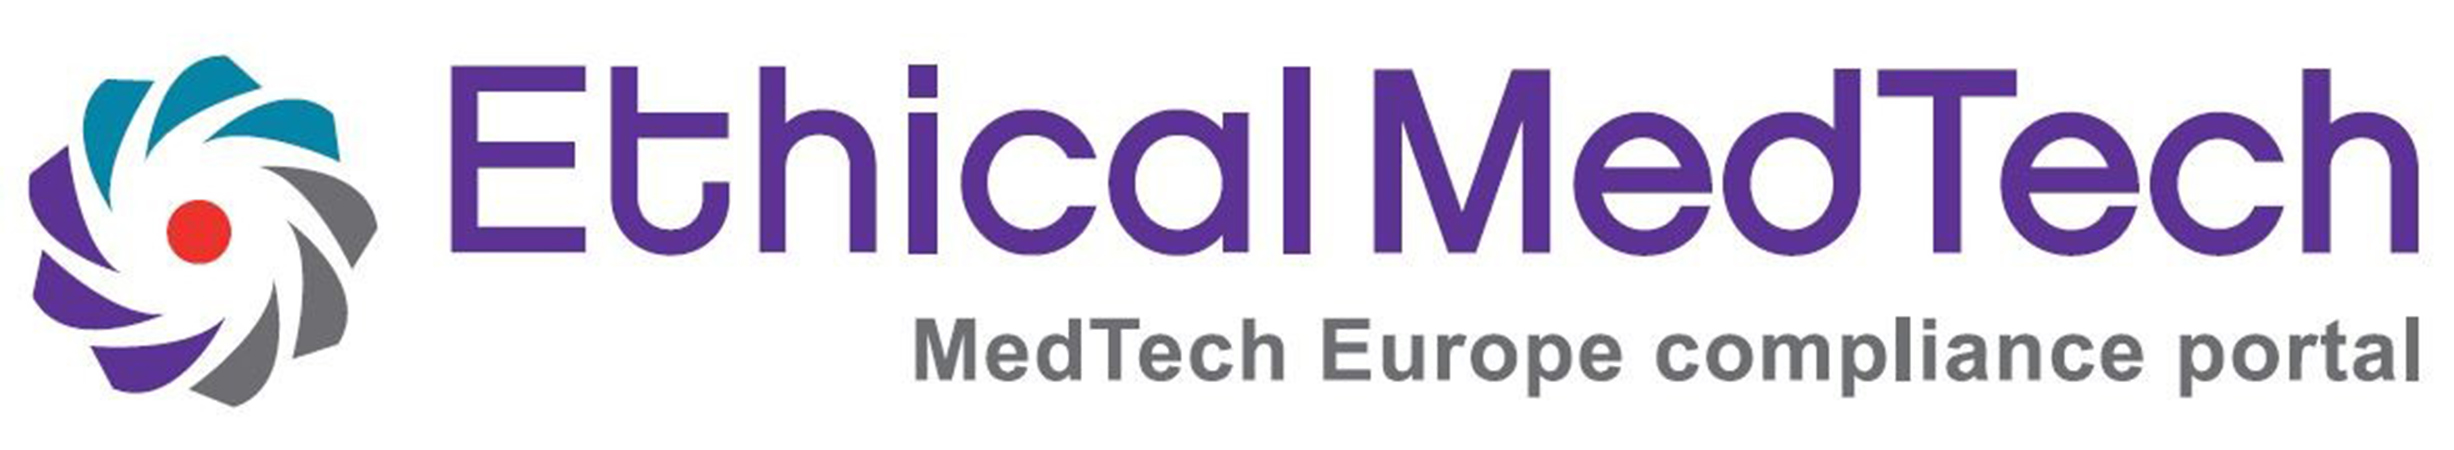 MedTech Logo 4c